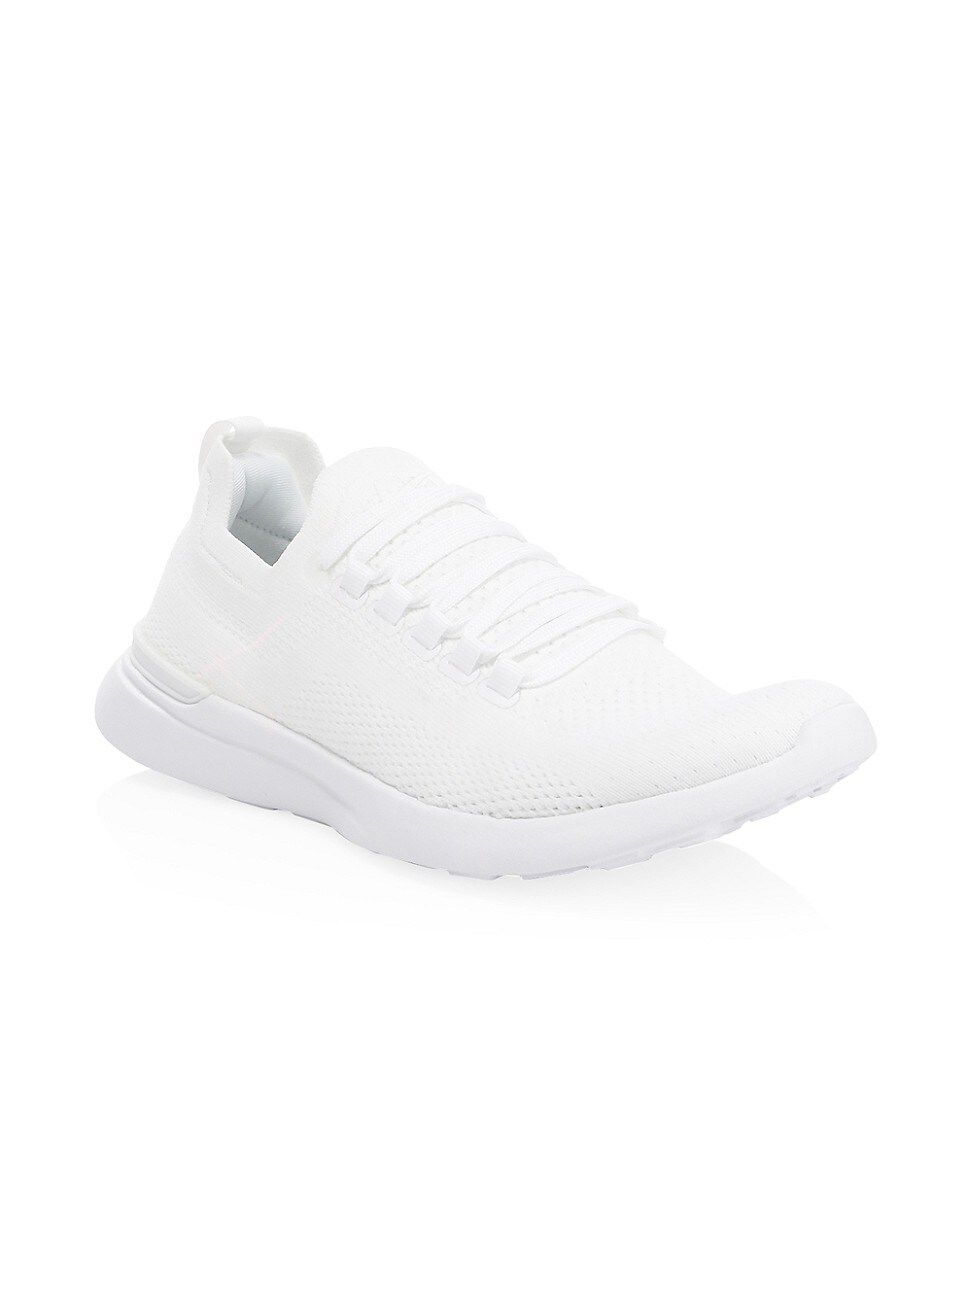 APL Athletic Propulsion Labs Women's Women's TechLoom Breeze Sneakers - White - Size 5.5 | Saks Fifth Avenue